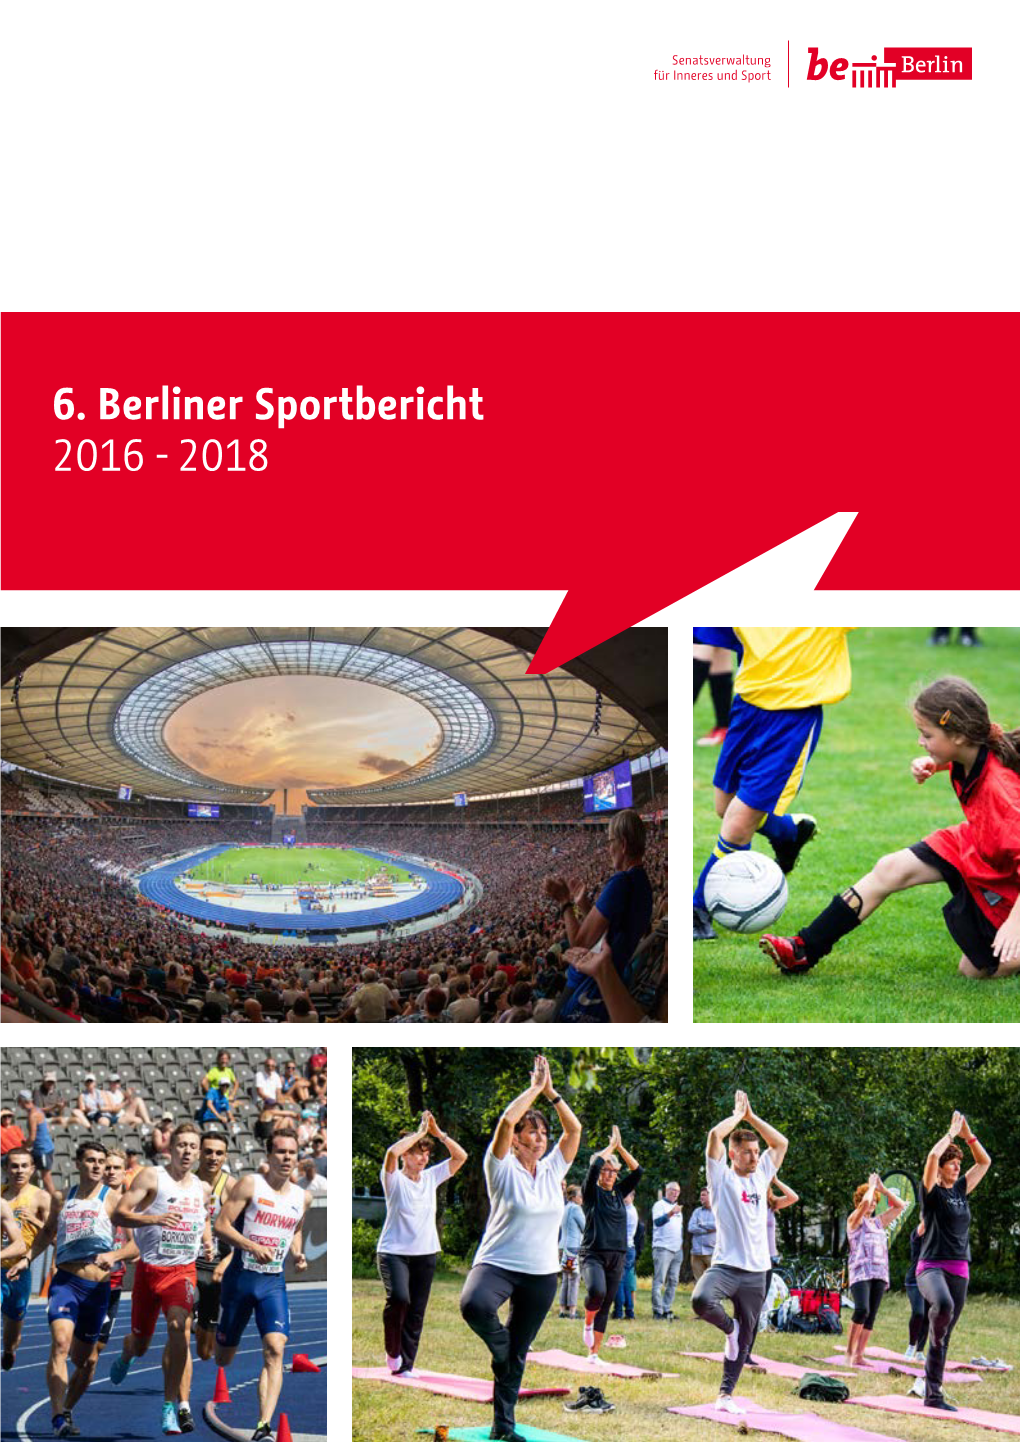 6. Berliner Sportbericht 2016-2018